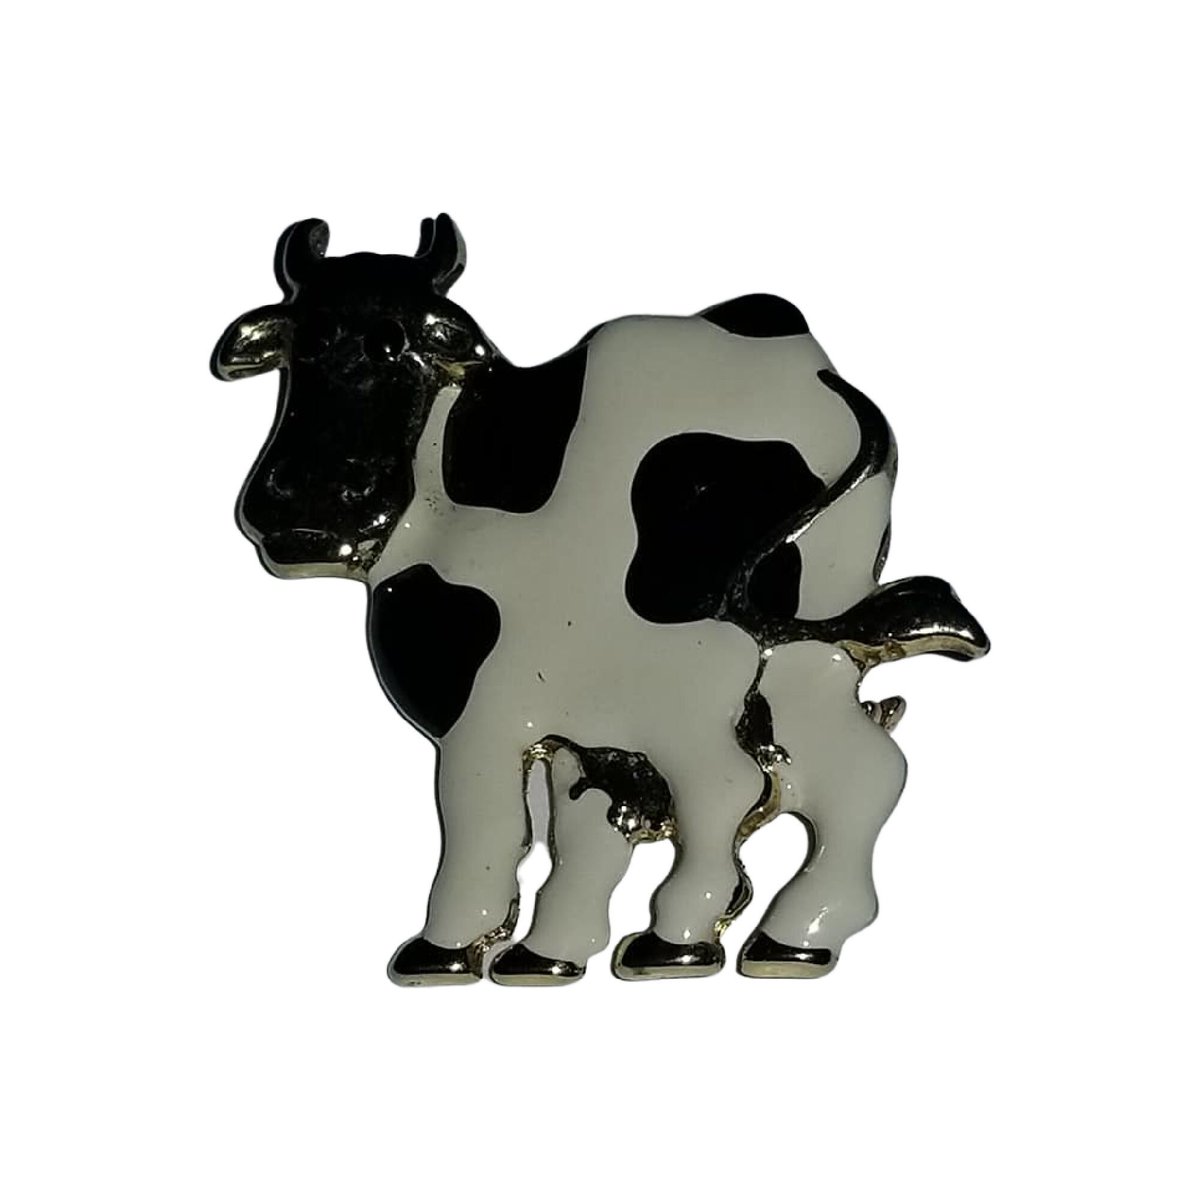 Vintage Enamel COW Brooch, Free Shipping tuppu.net/cc273313 #Etsy #JunkYardBlonde #AnimalJewelry